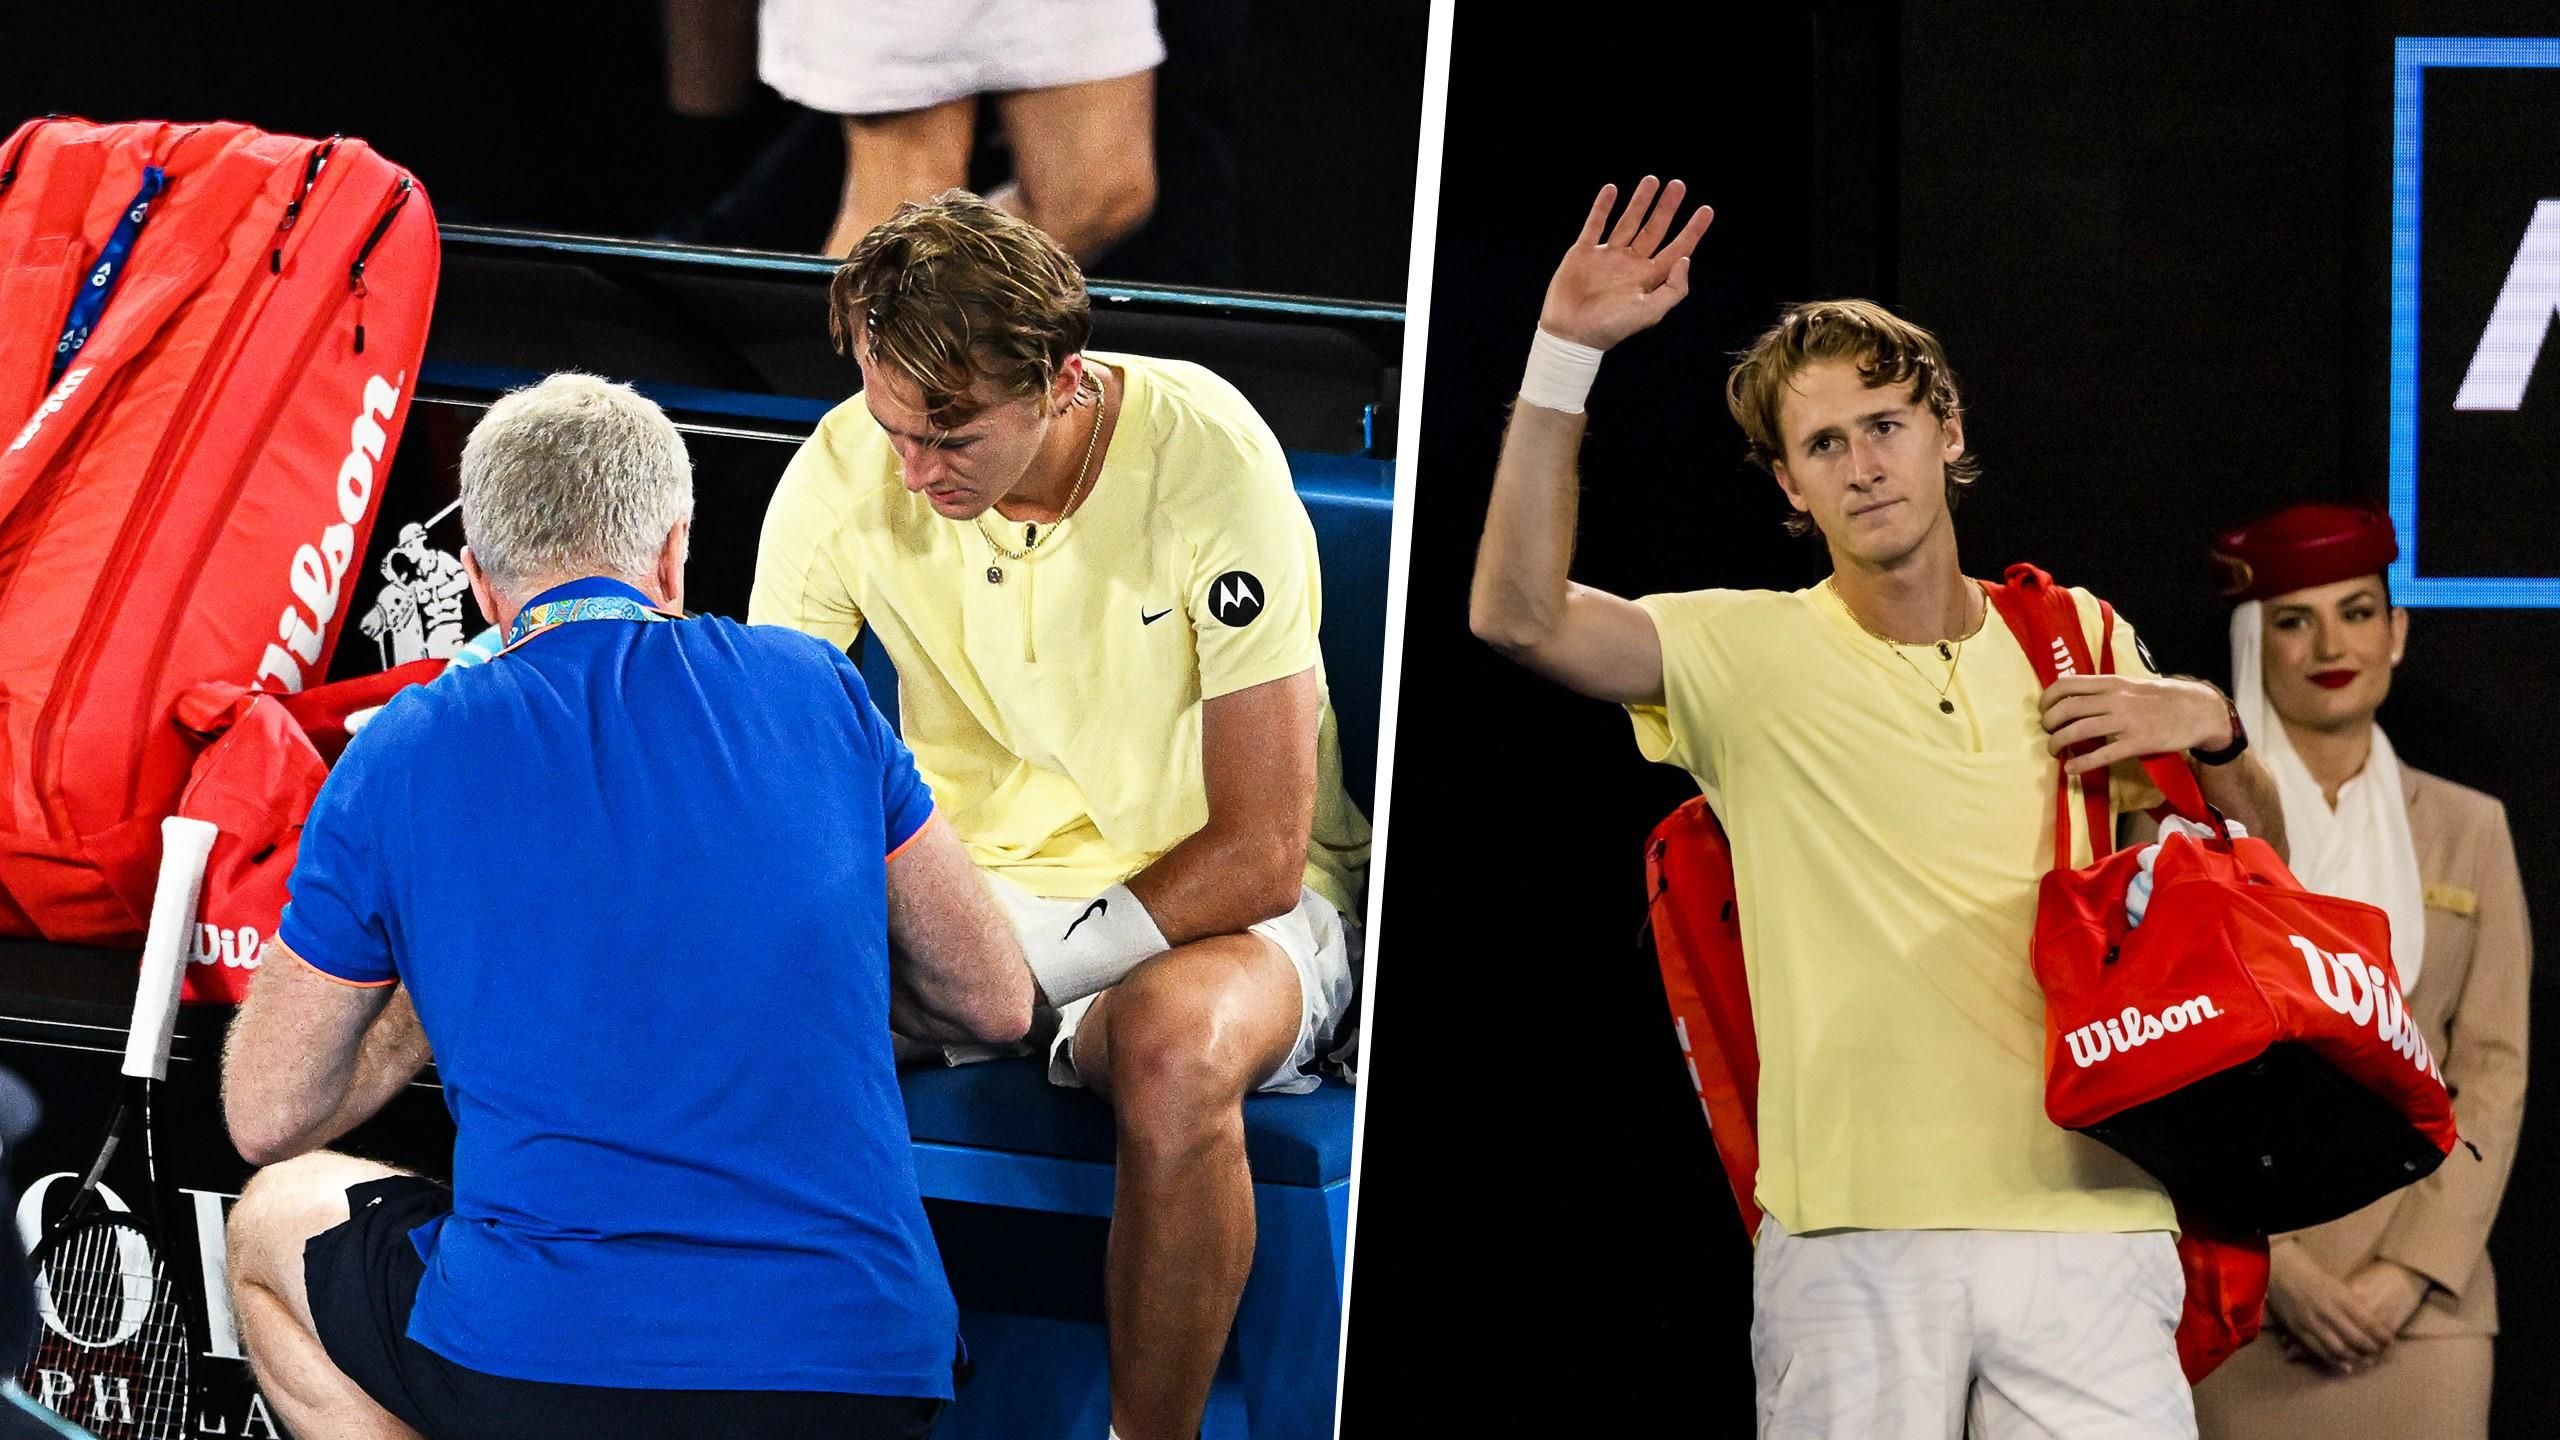 Heartbreaking scenes as Sebastian Korda retires injured in his first Grand Slam quarter-final at Australian Open